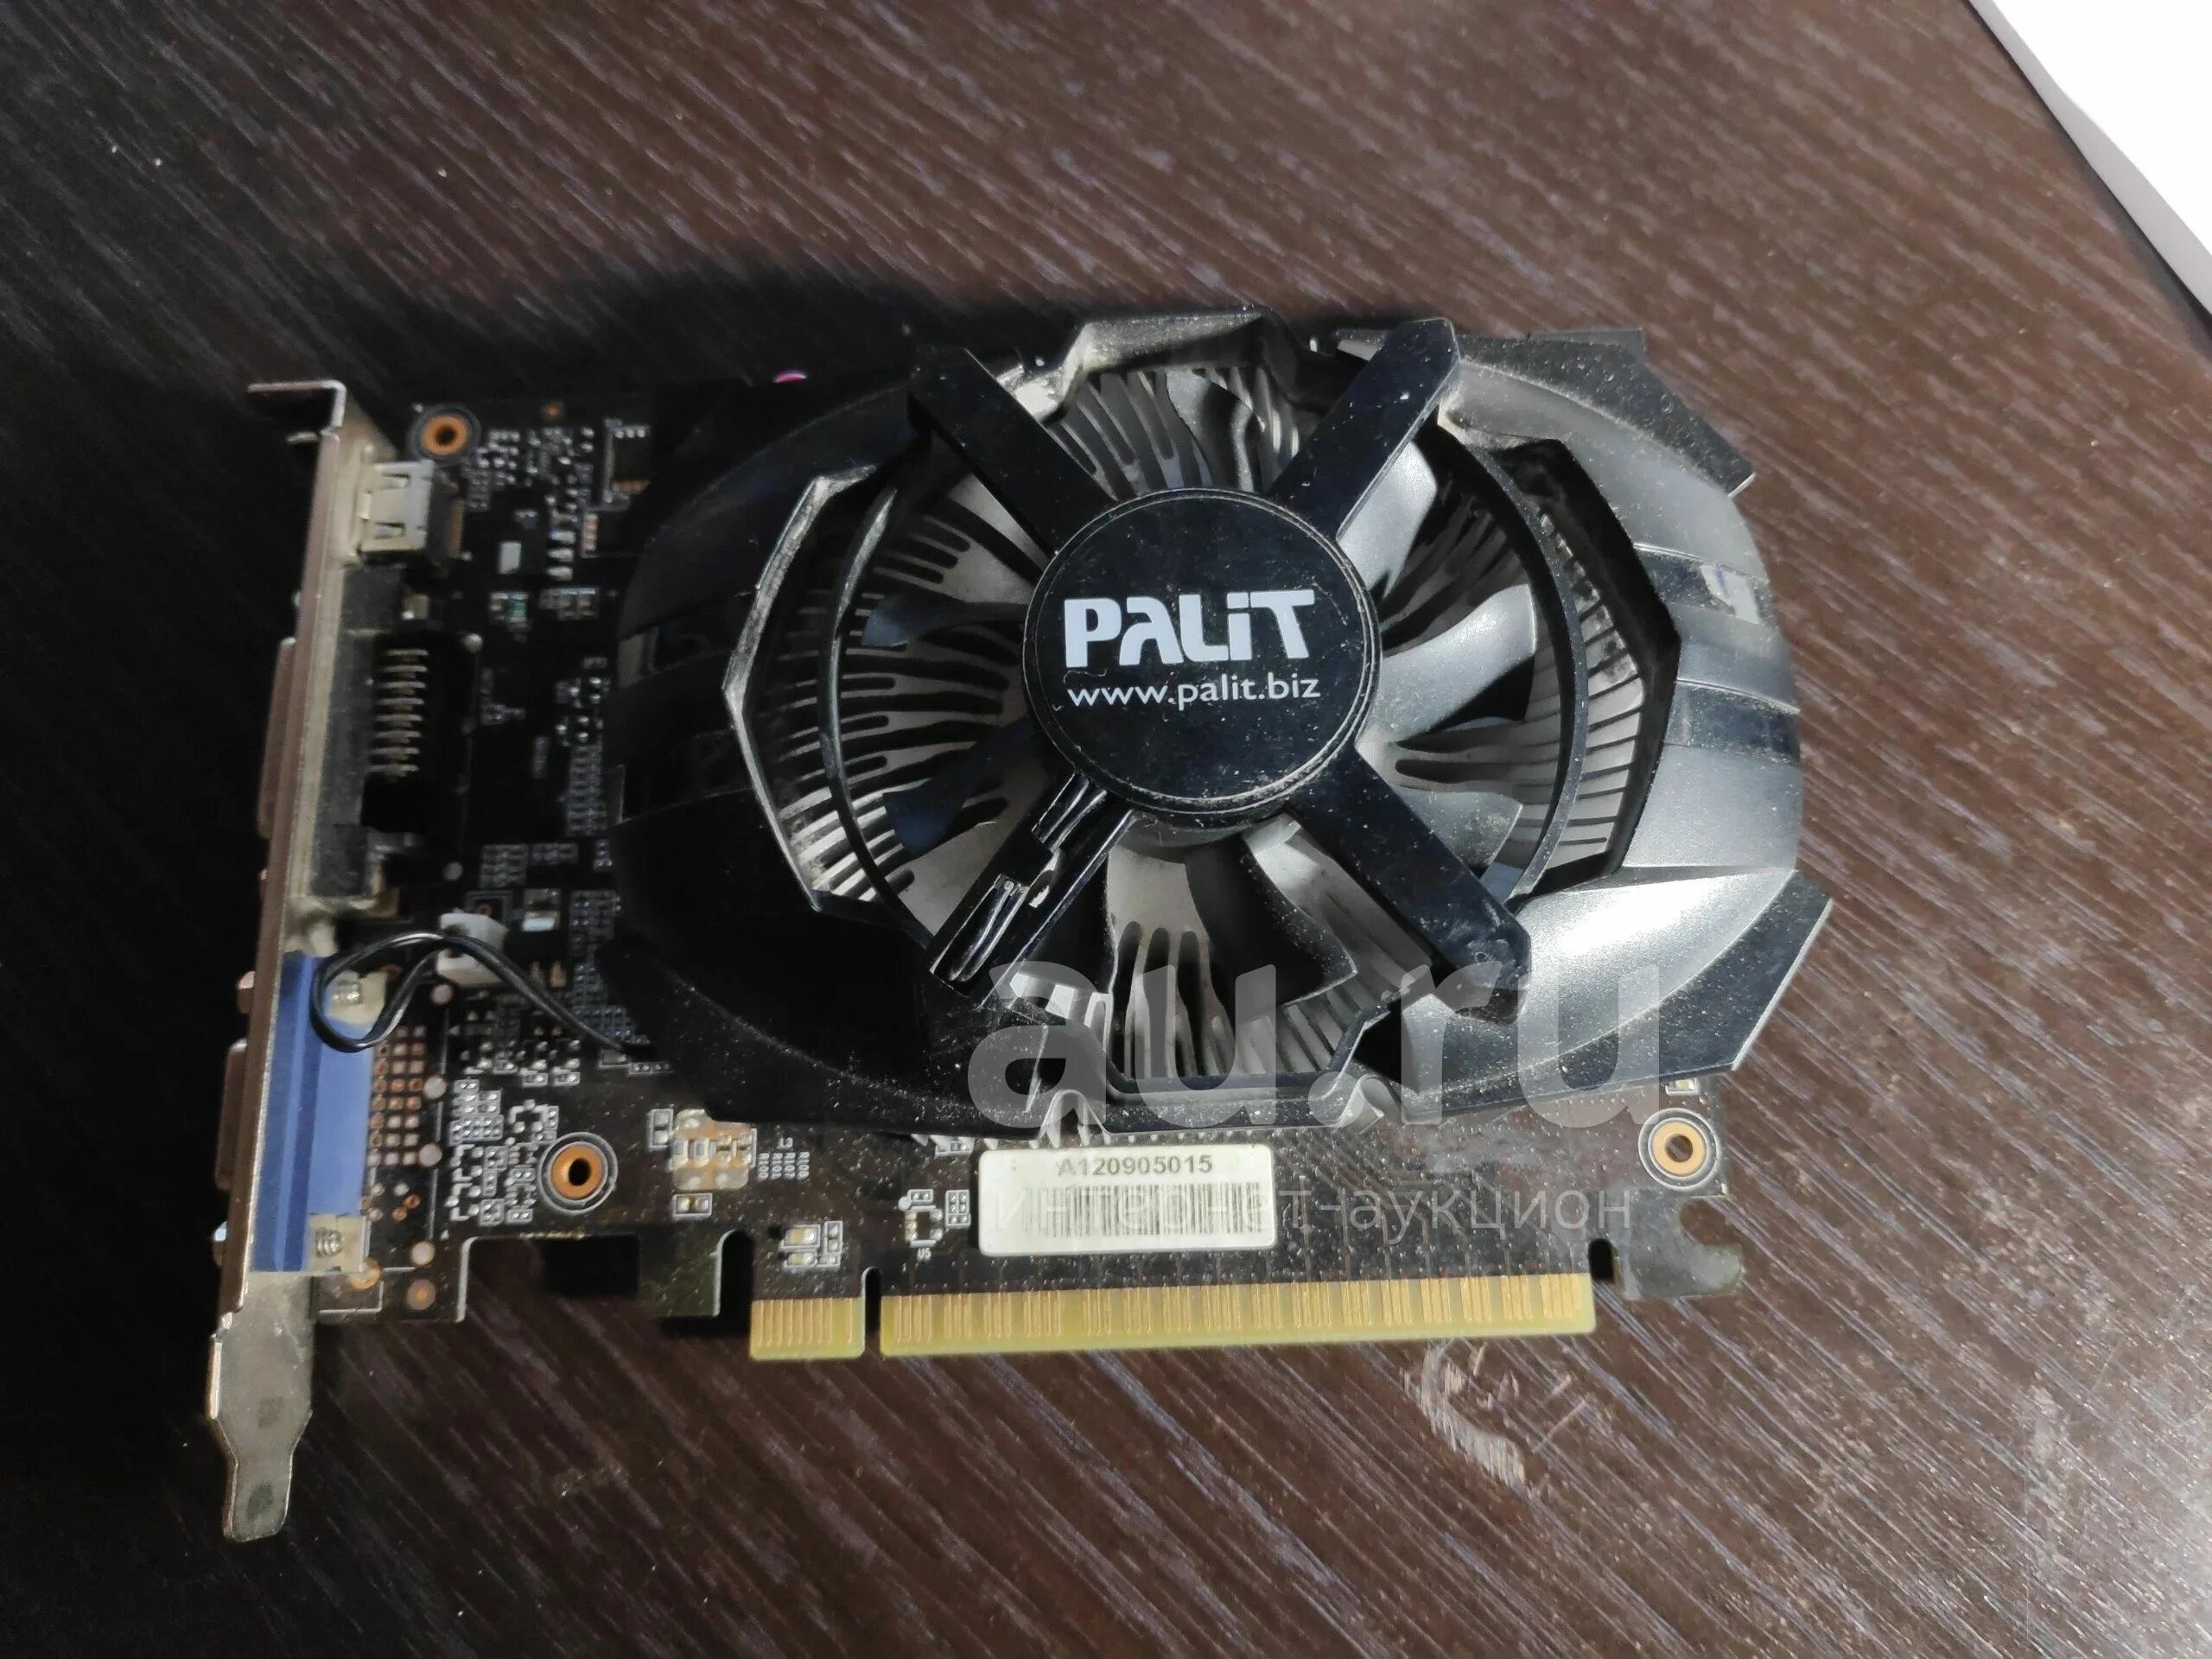 Palit 650. Gtx650 1024m gddr5. GEFORCE 650. F-v650-1024b. Geforce 650 цена